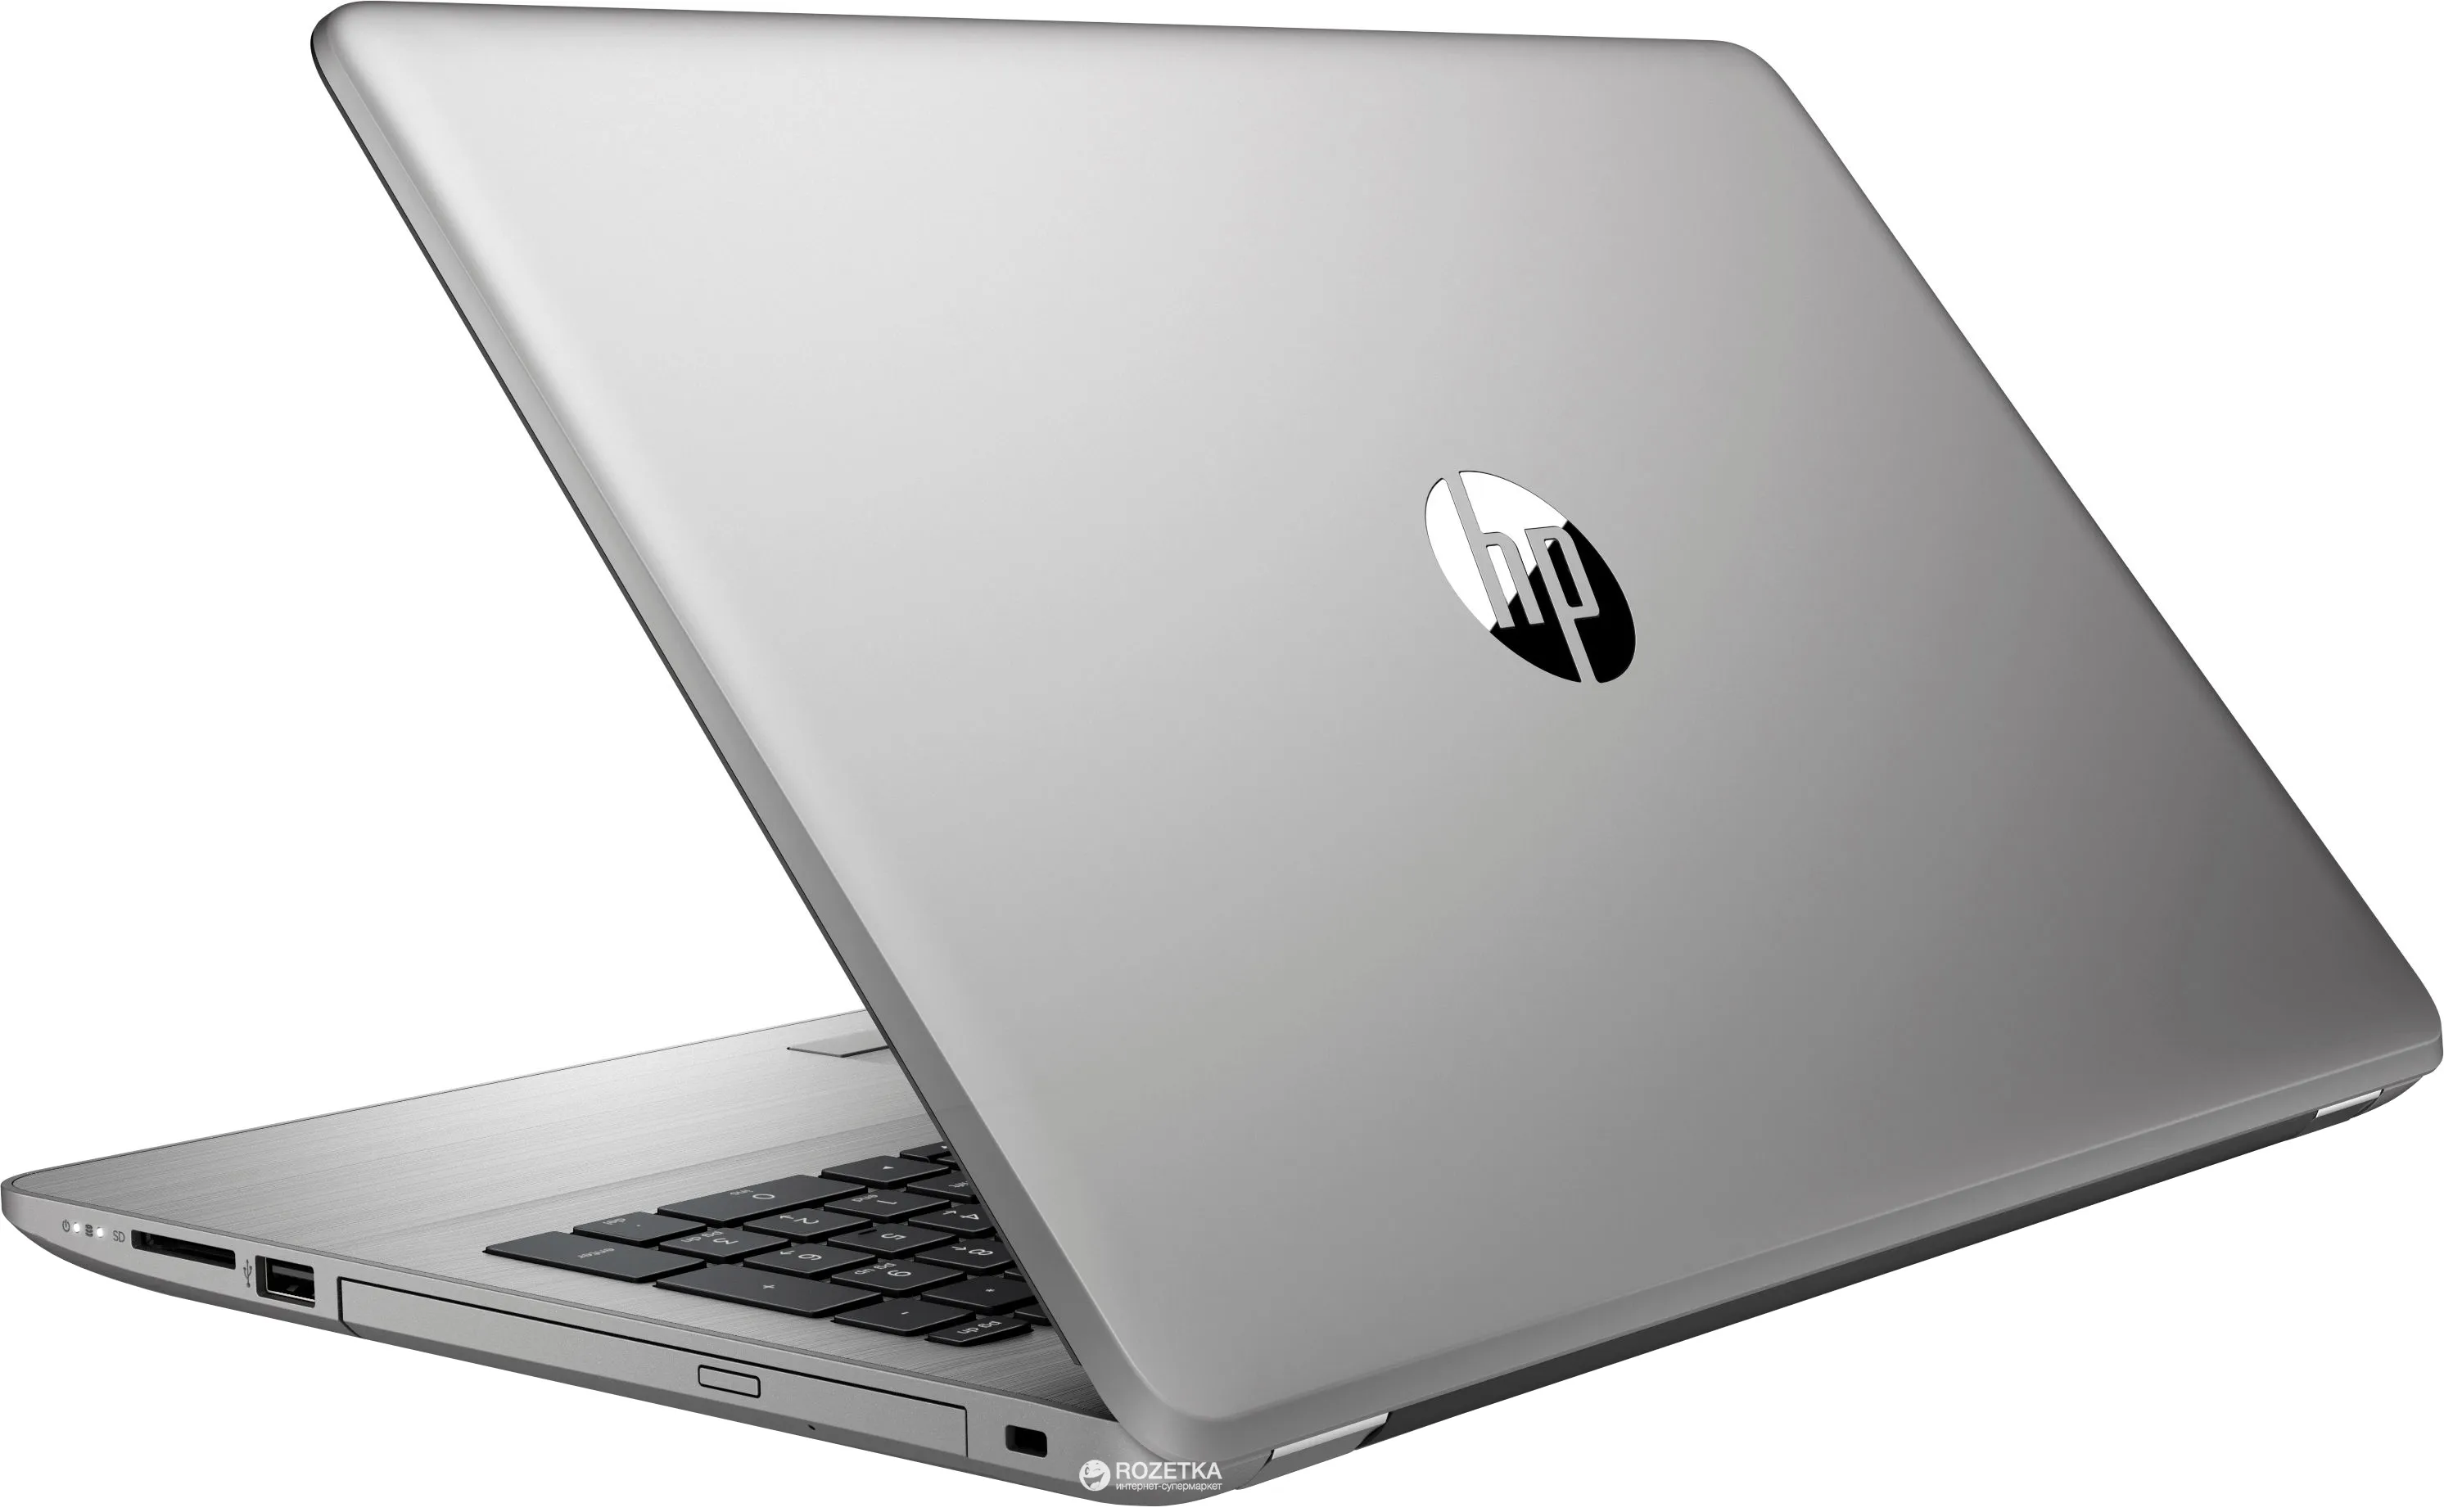 Ноутбук HP 250 G6 /Celeron 3060/4 GB DDR3/ 500GB HDD /15.6" HD LED/Intel HD Graphics 5500/ DVD / RUS#9